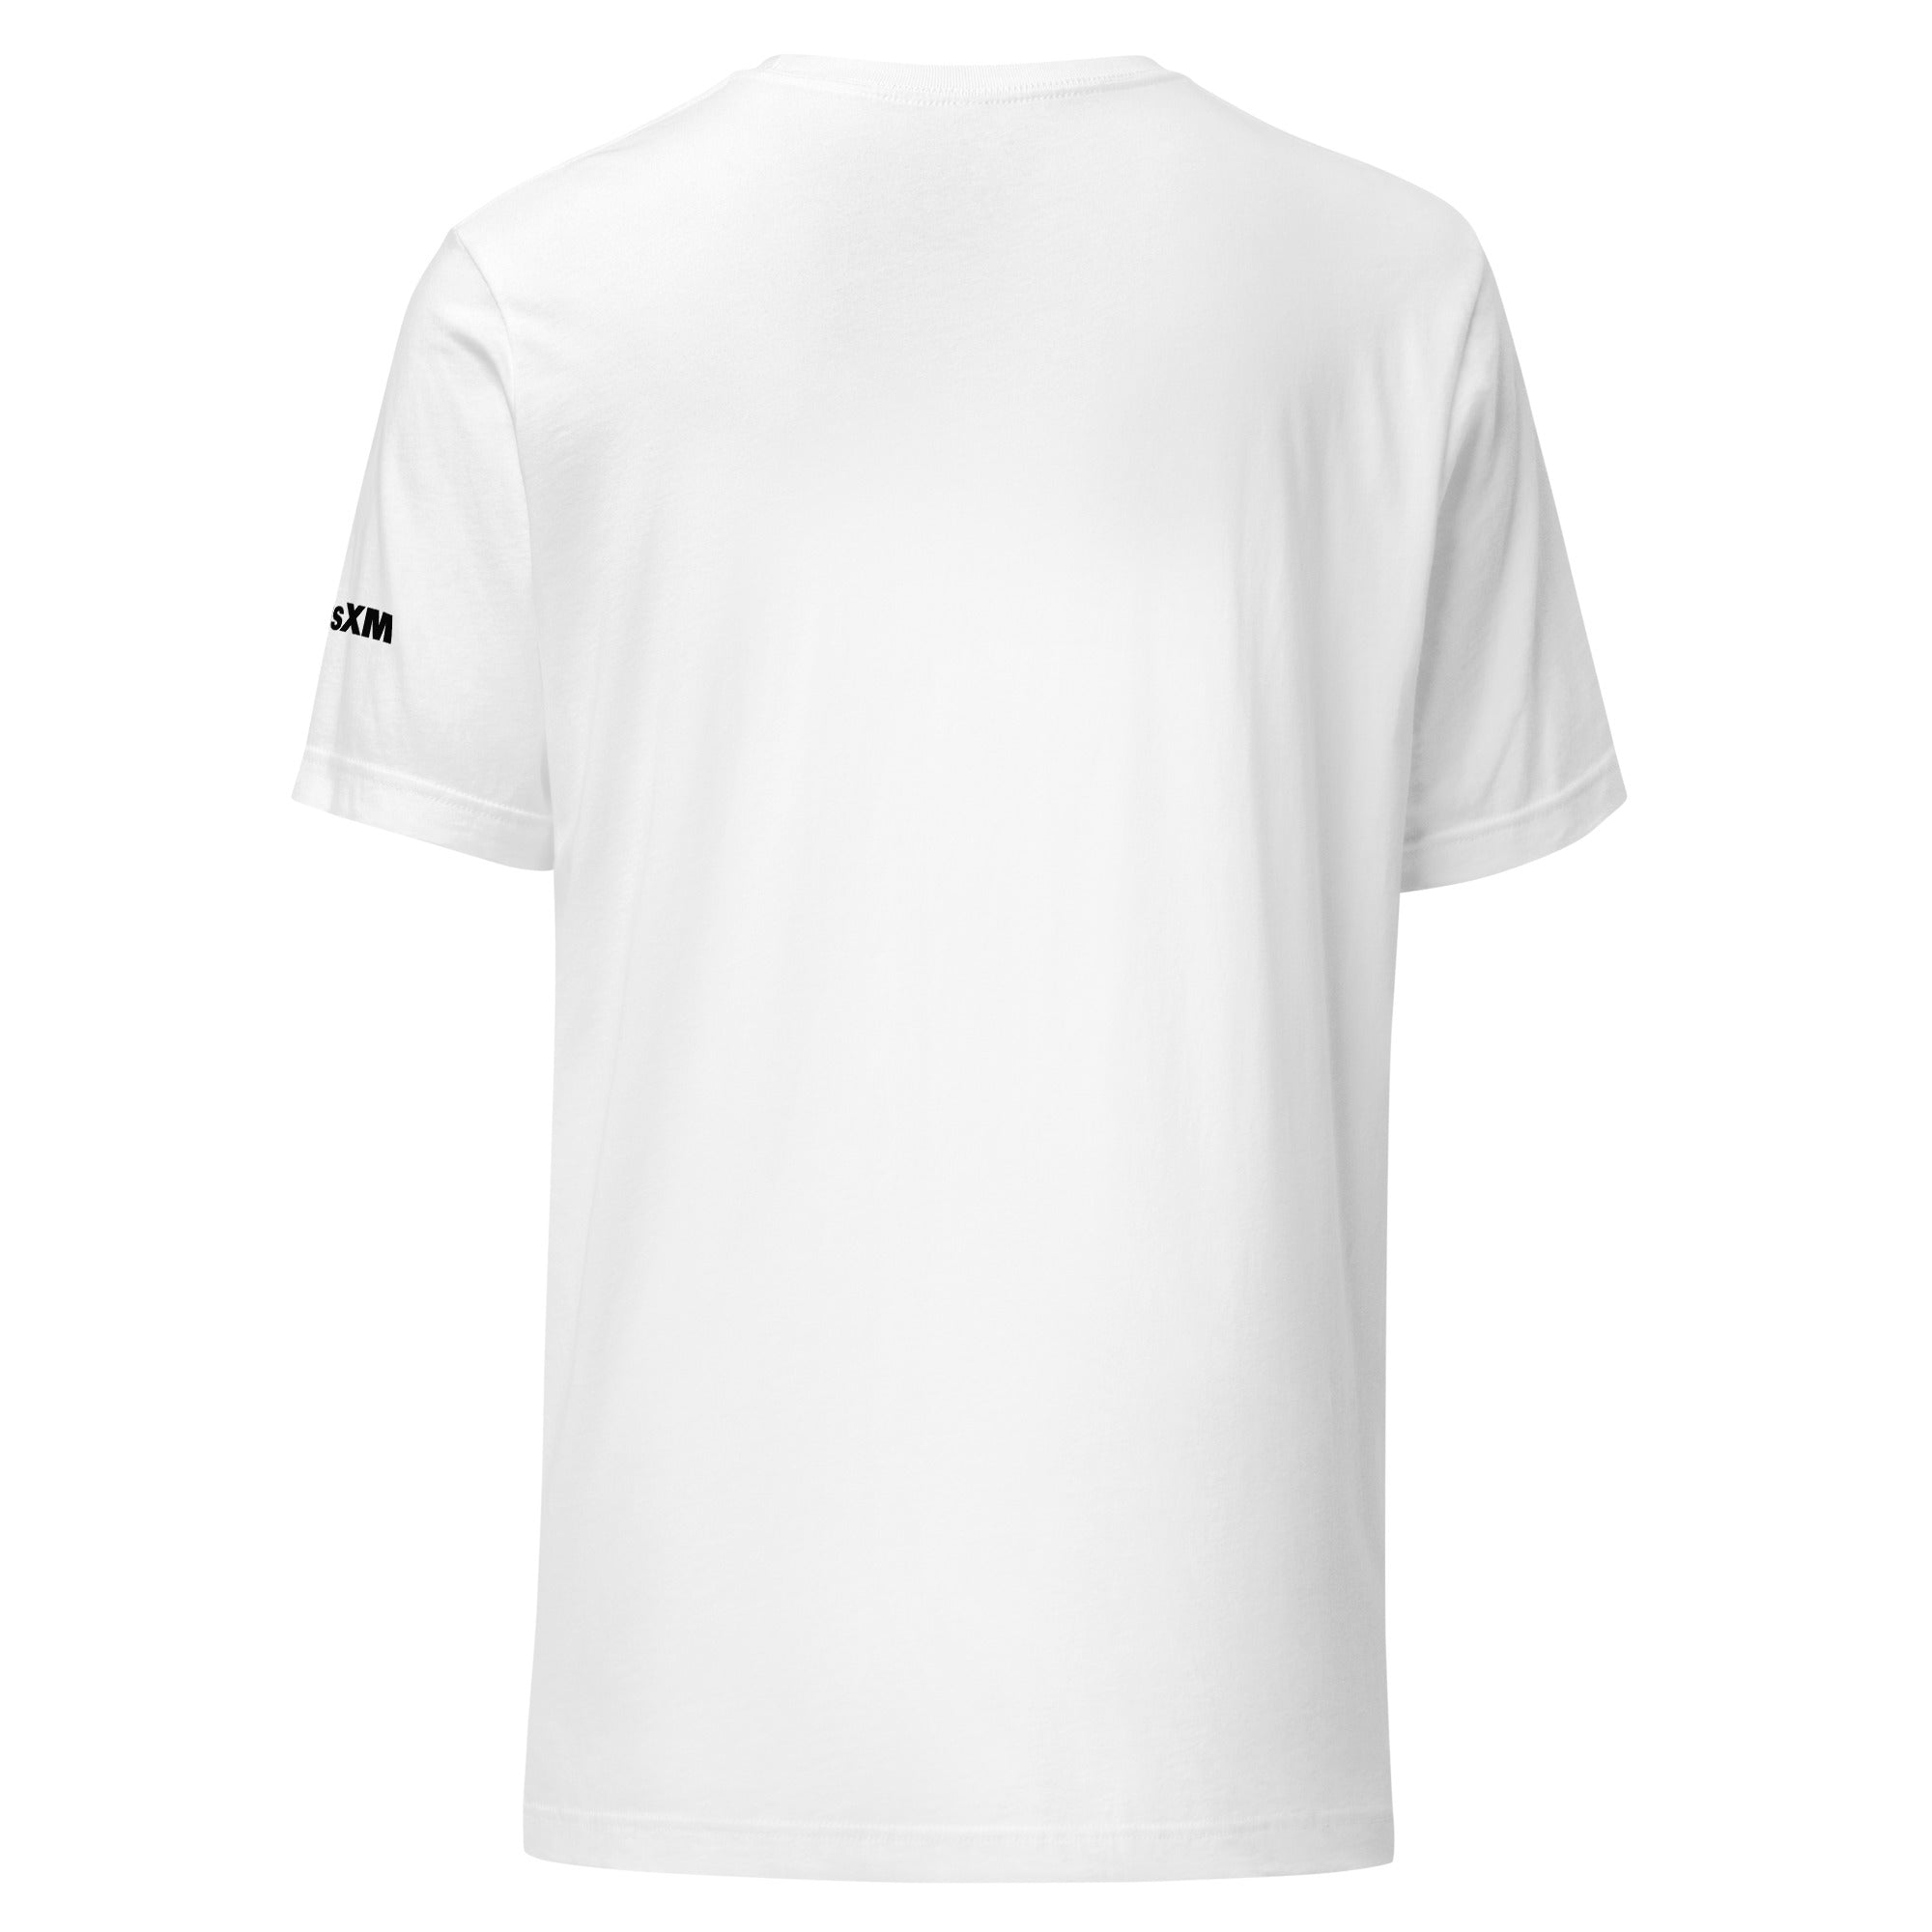 RockBar: T-shirt (White)